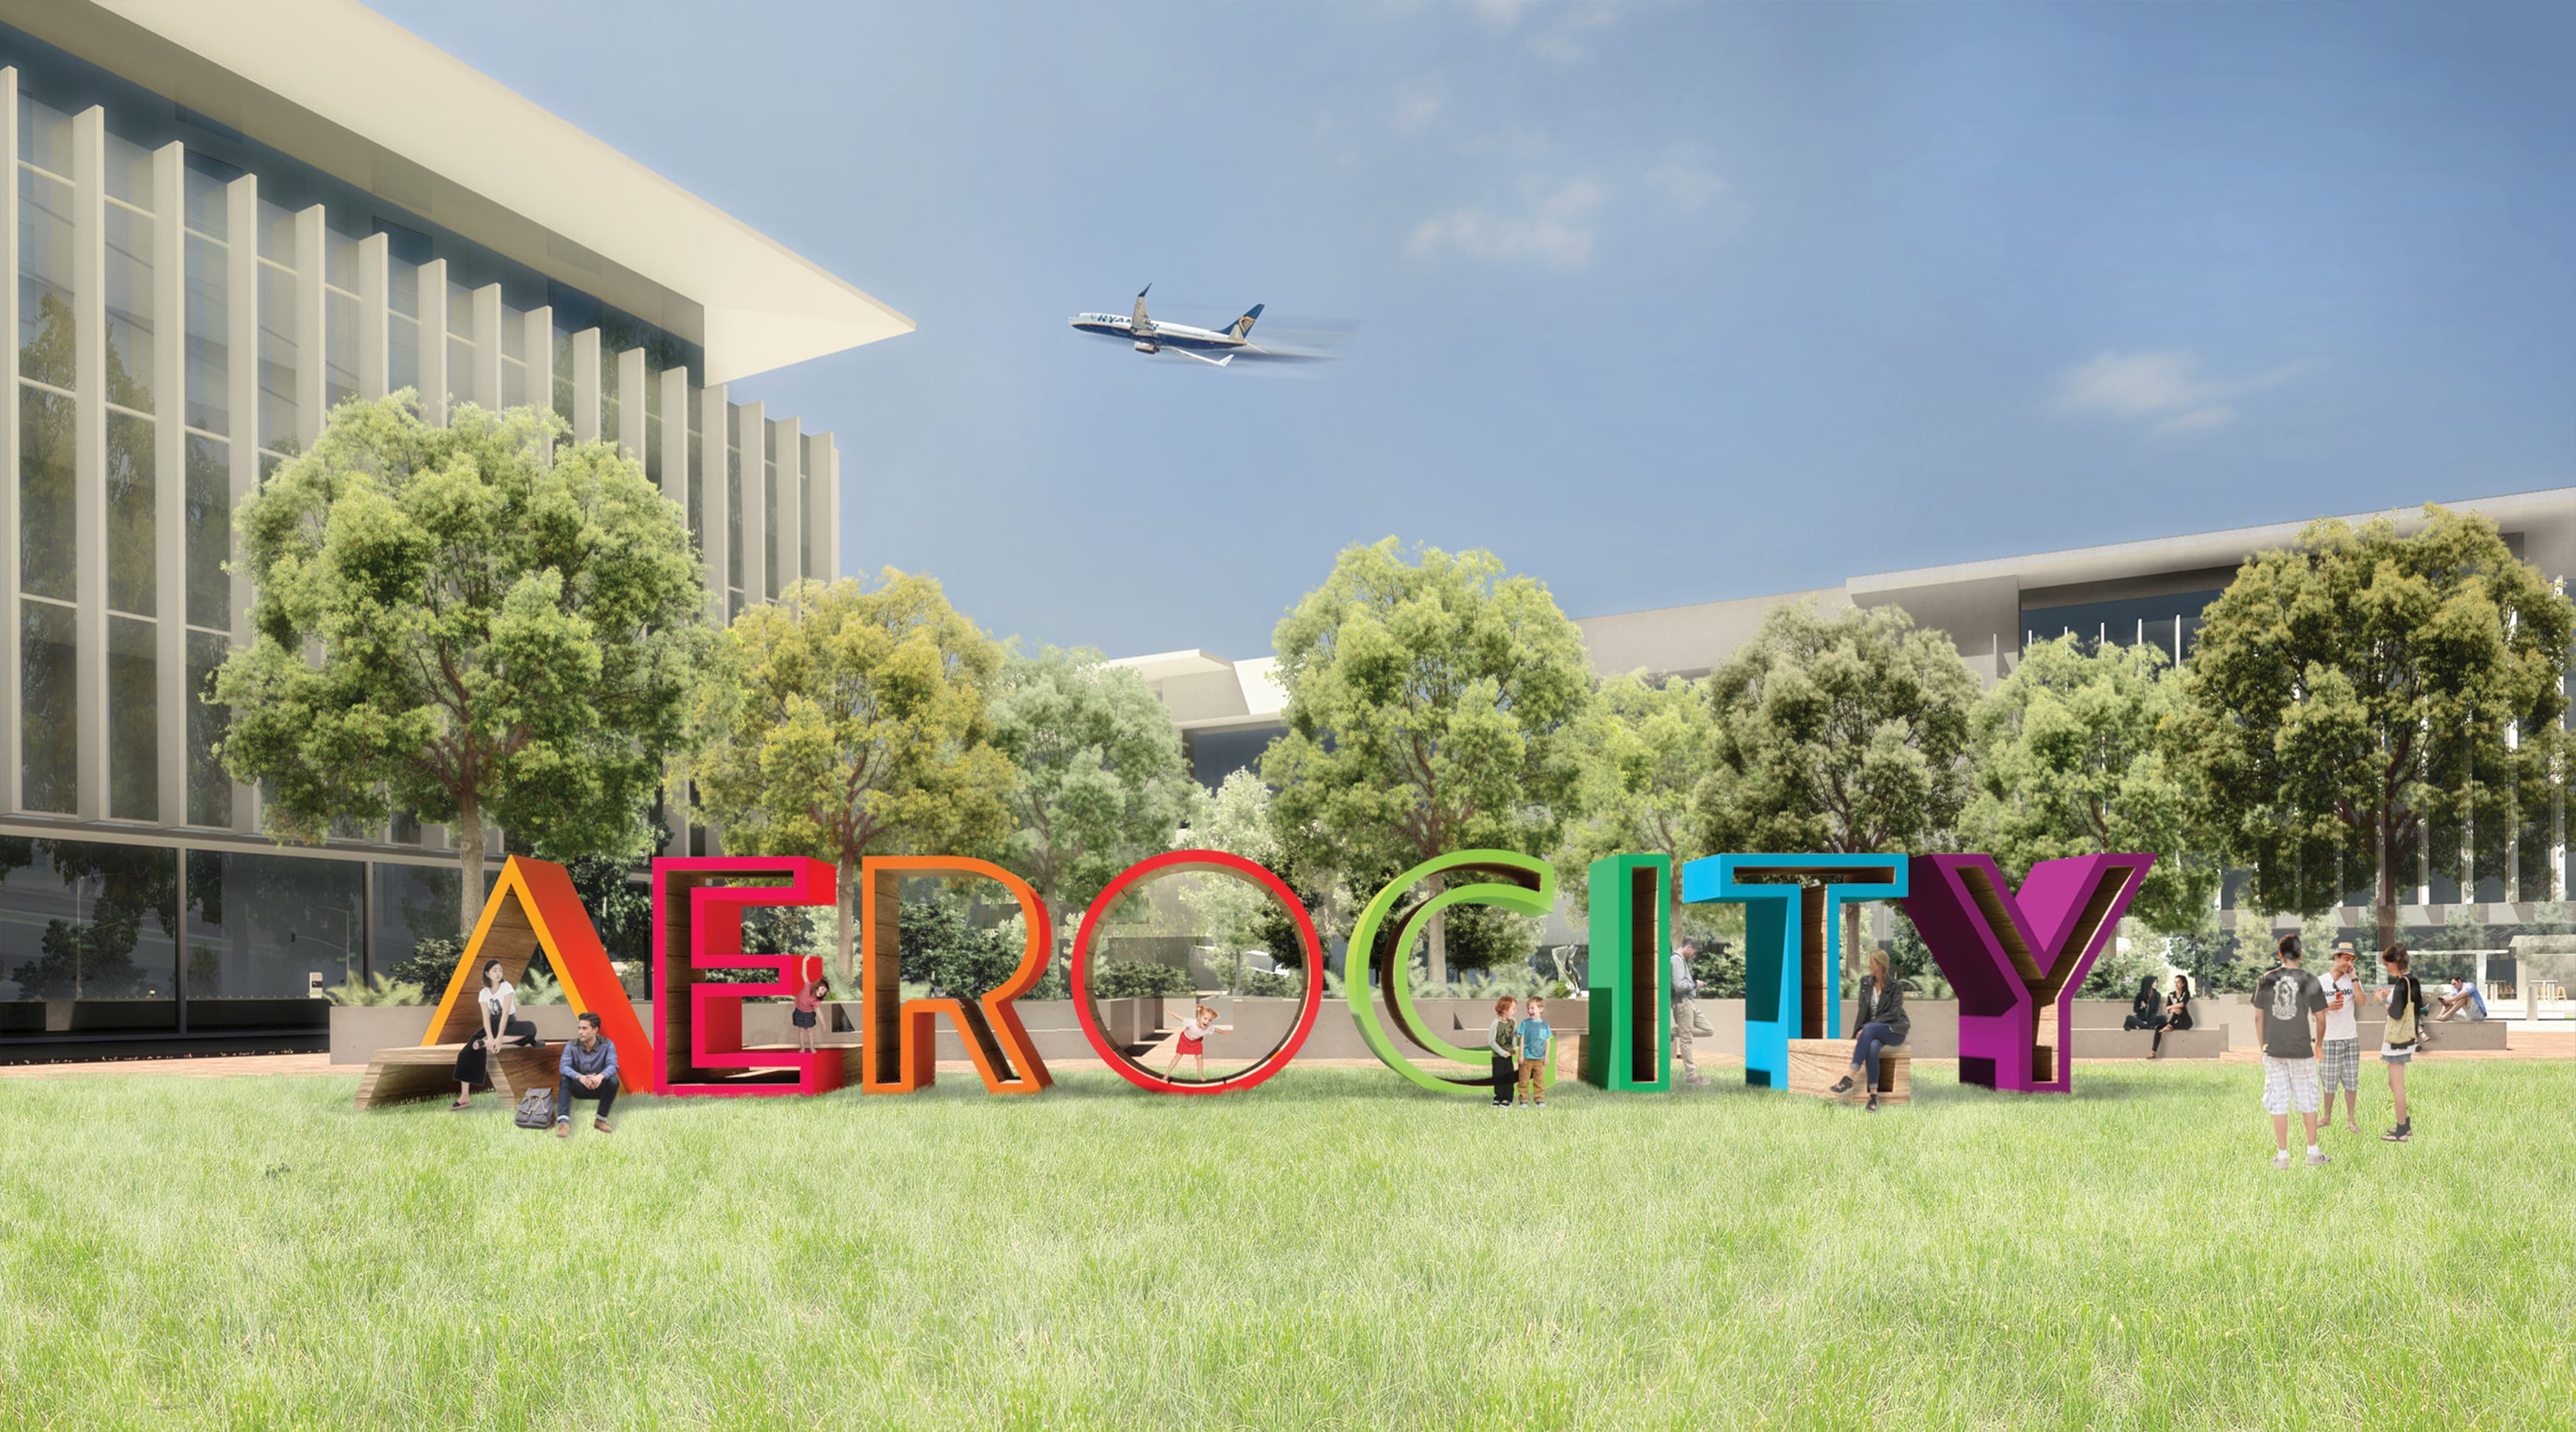 Aerocity, New Dehli, India, interactive branded project identity monument